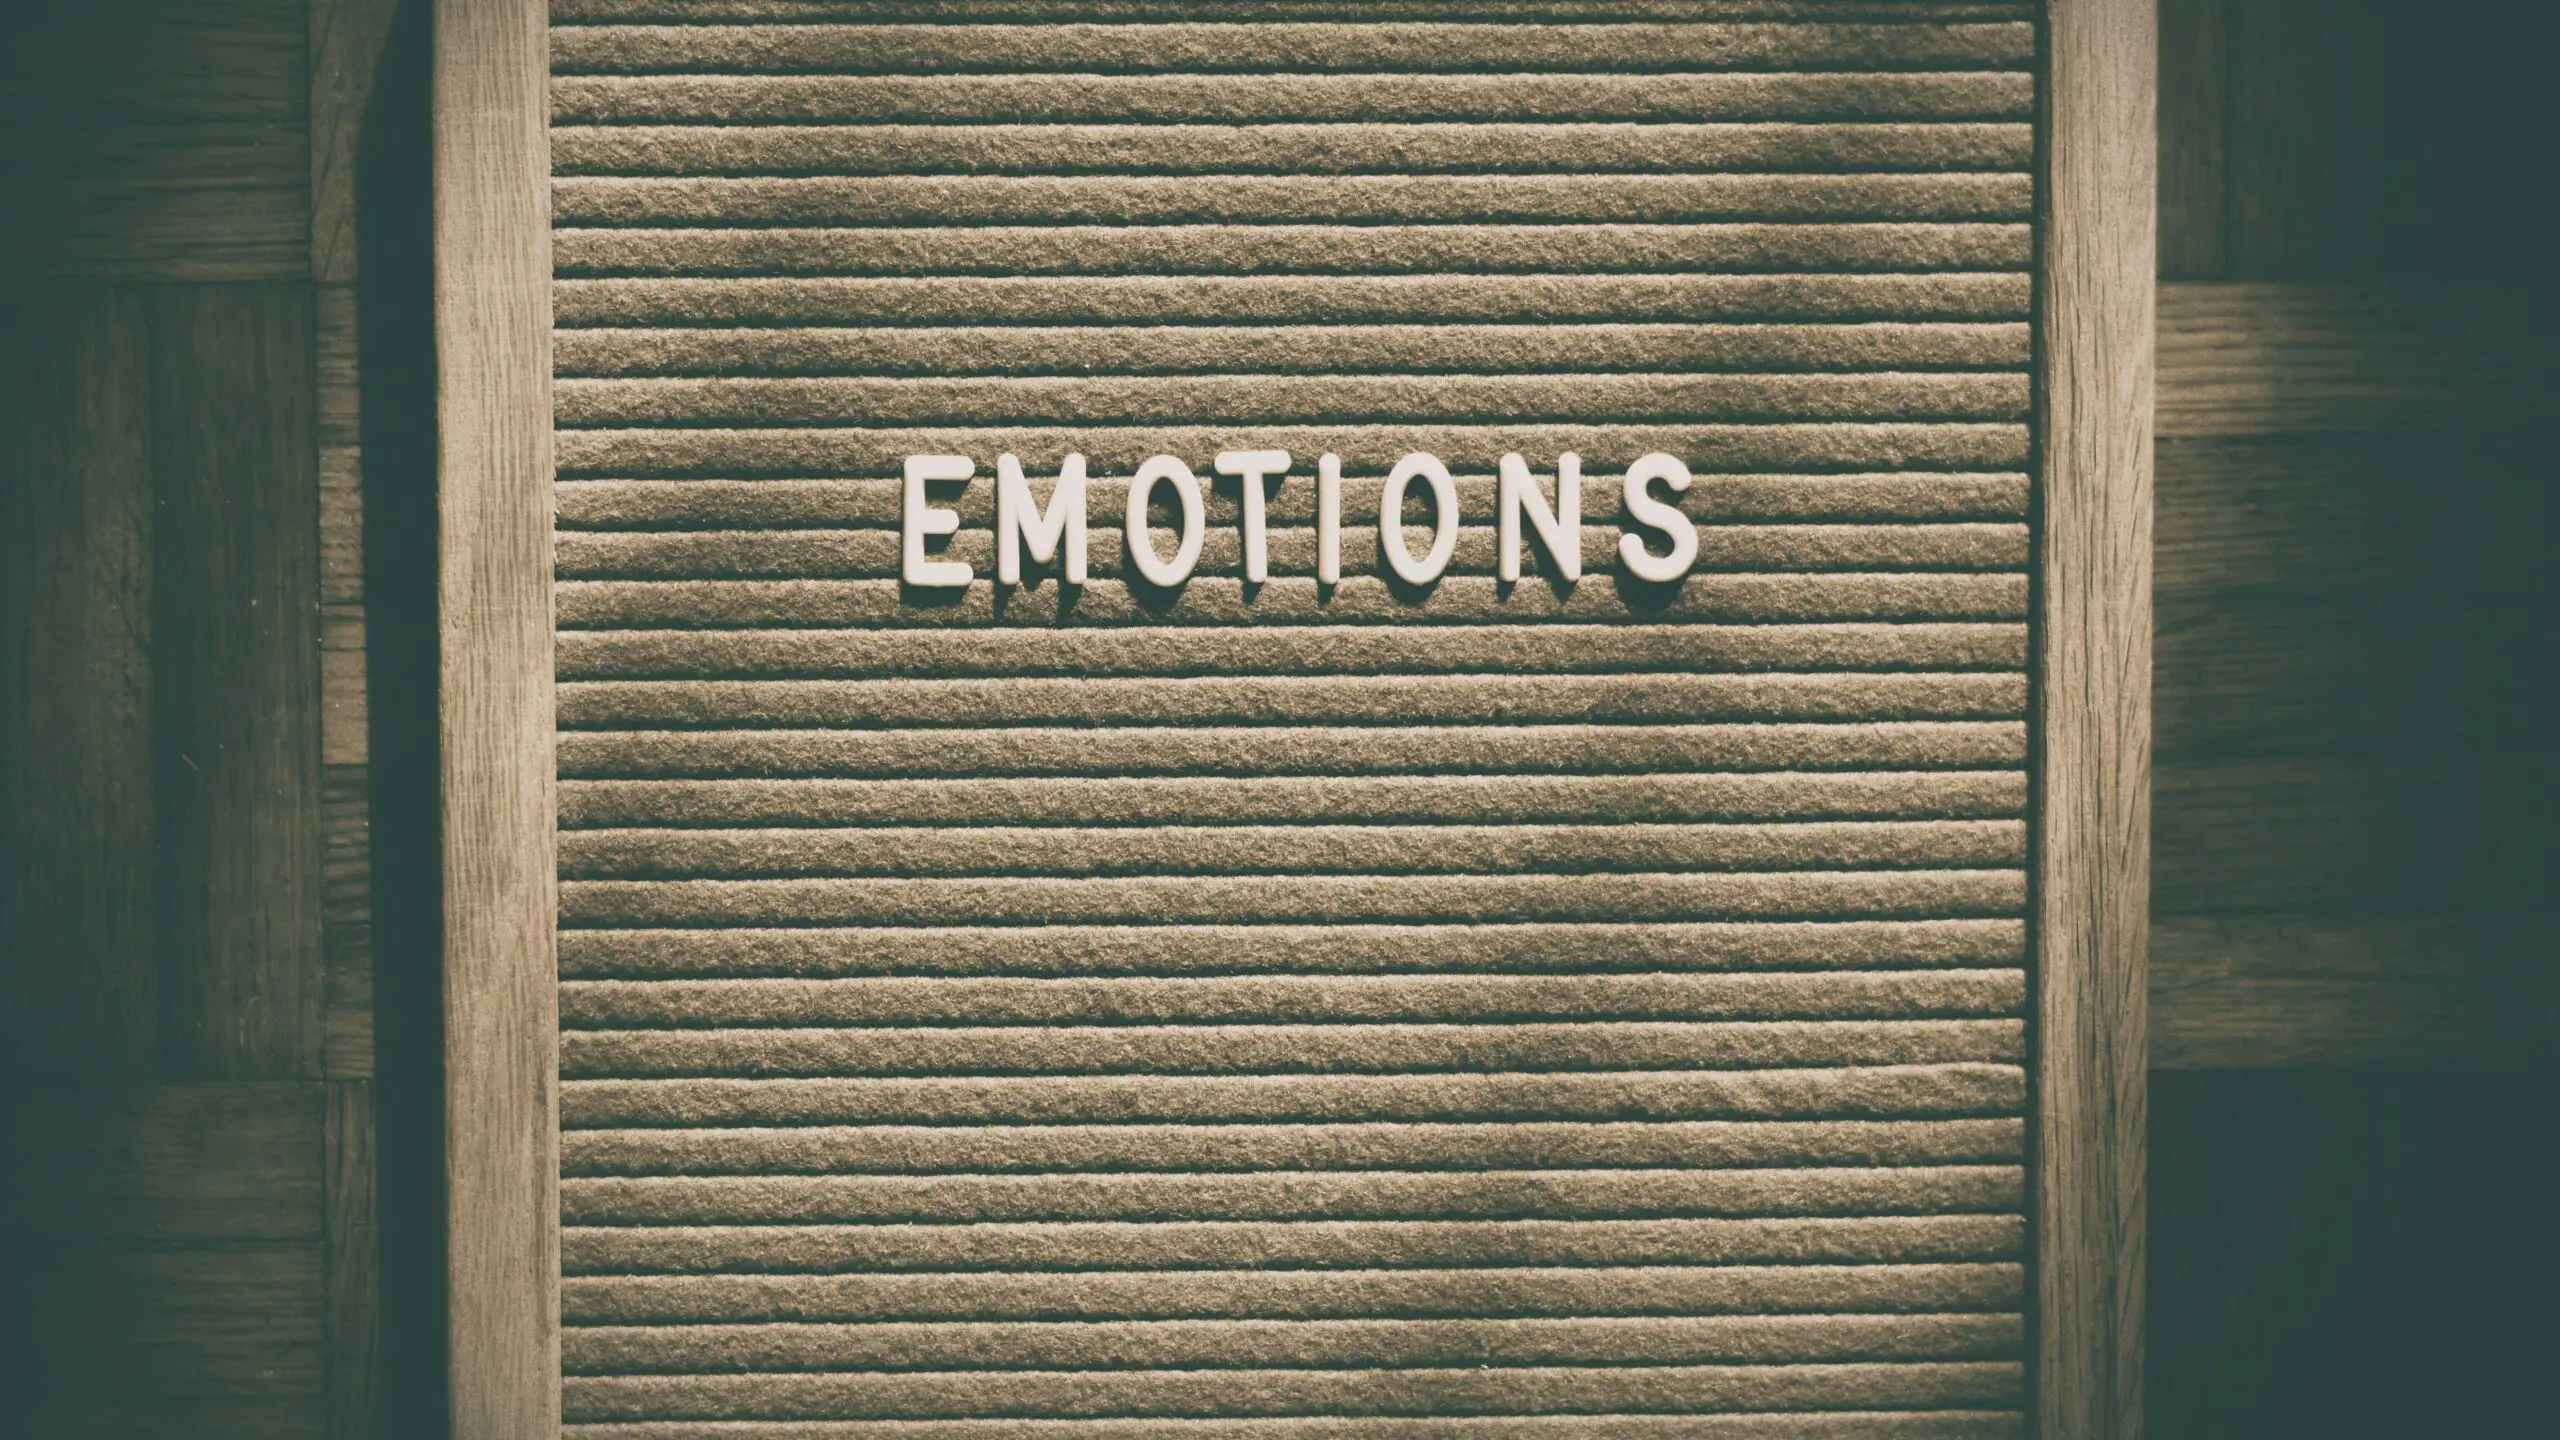 Wheel Of Emotions